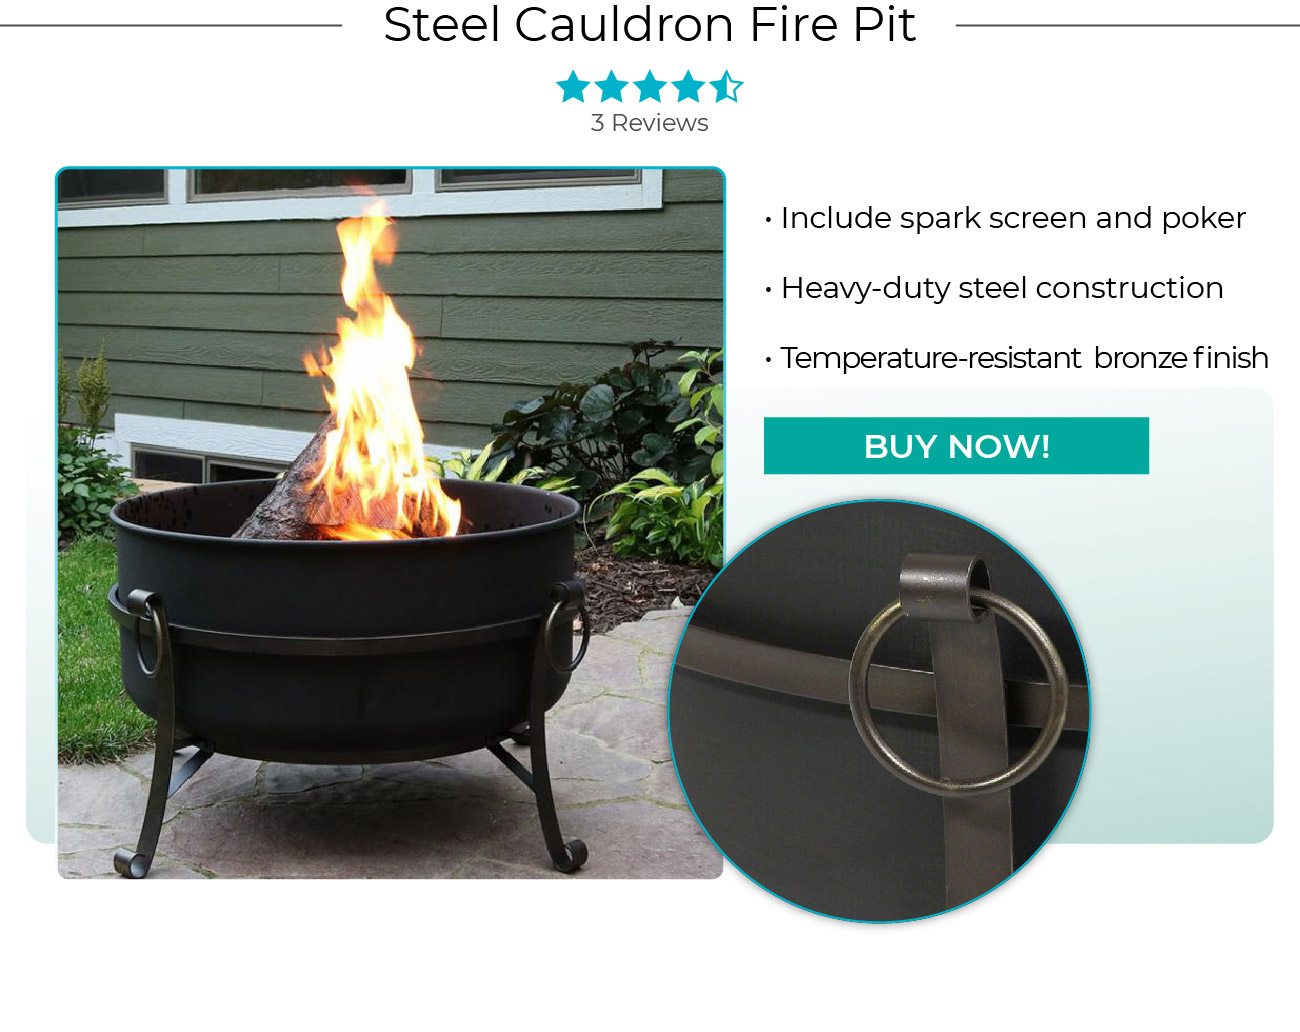 Steel Cauldron Fire Pit